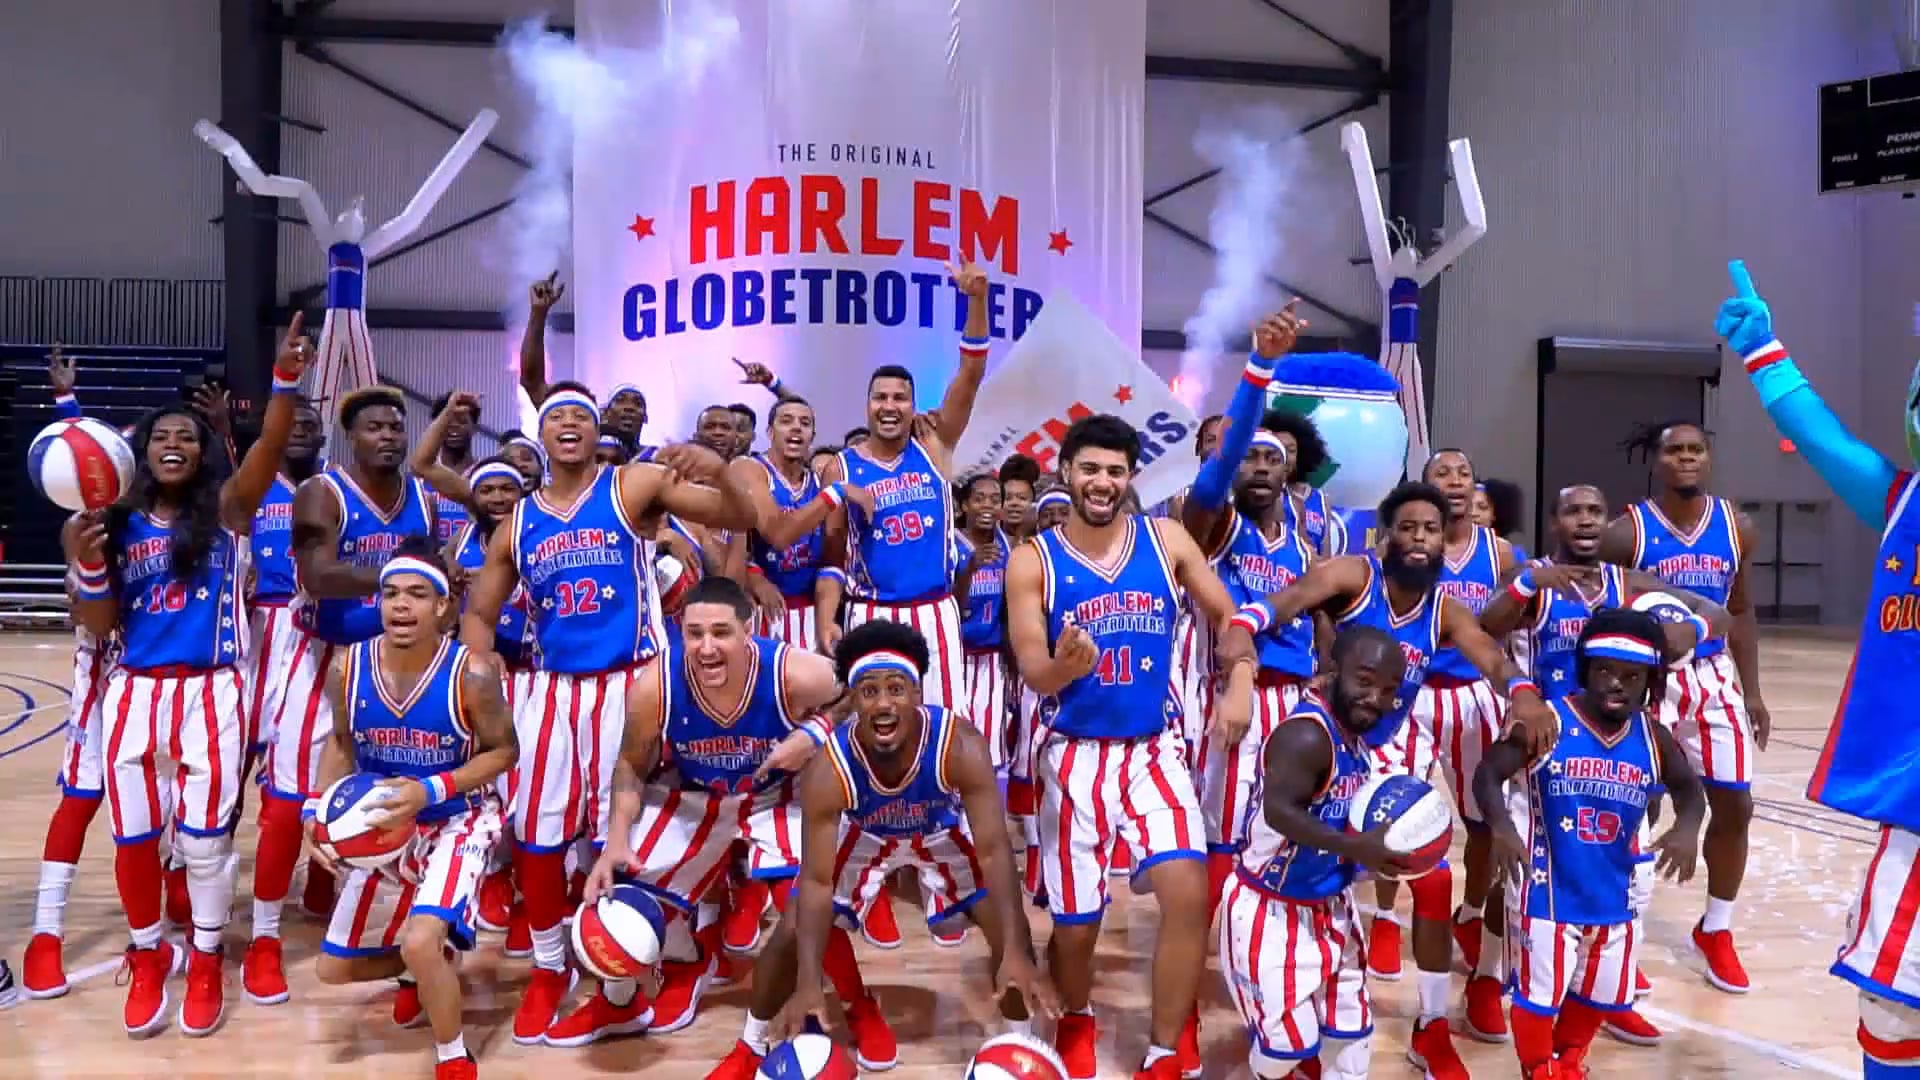 Harlem Globetrotters - One Take Video